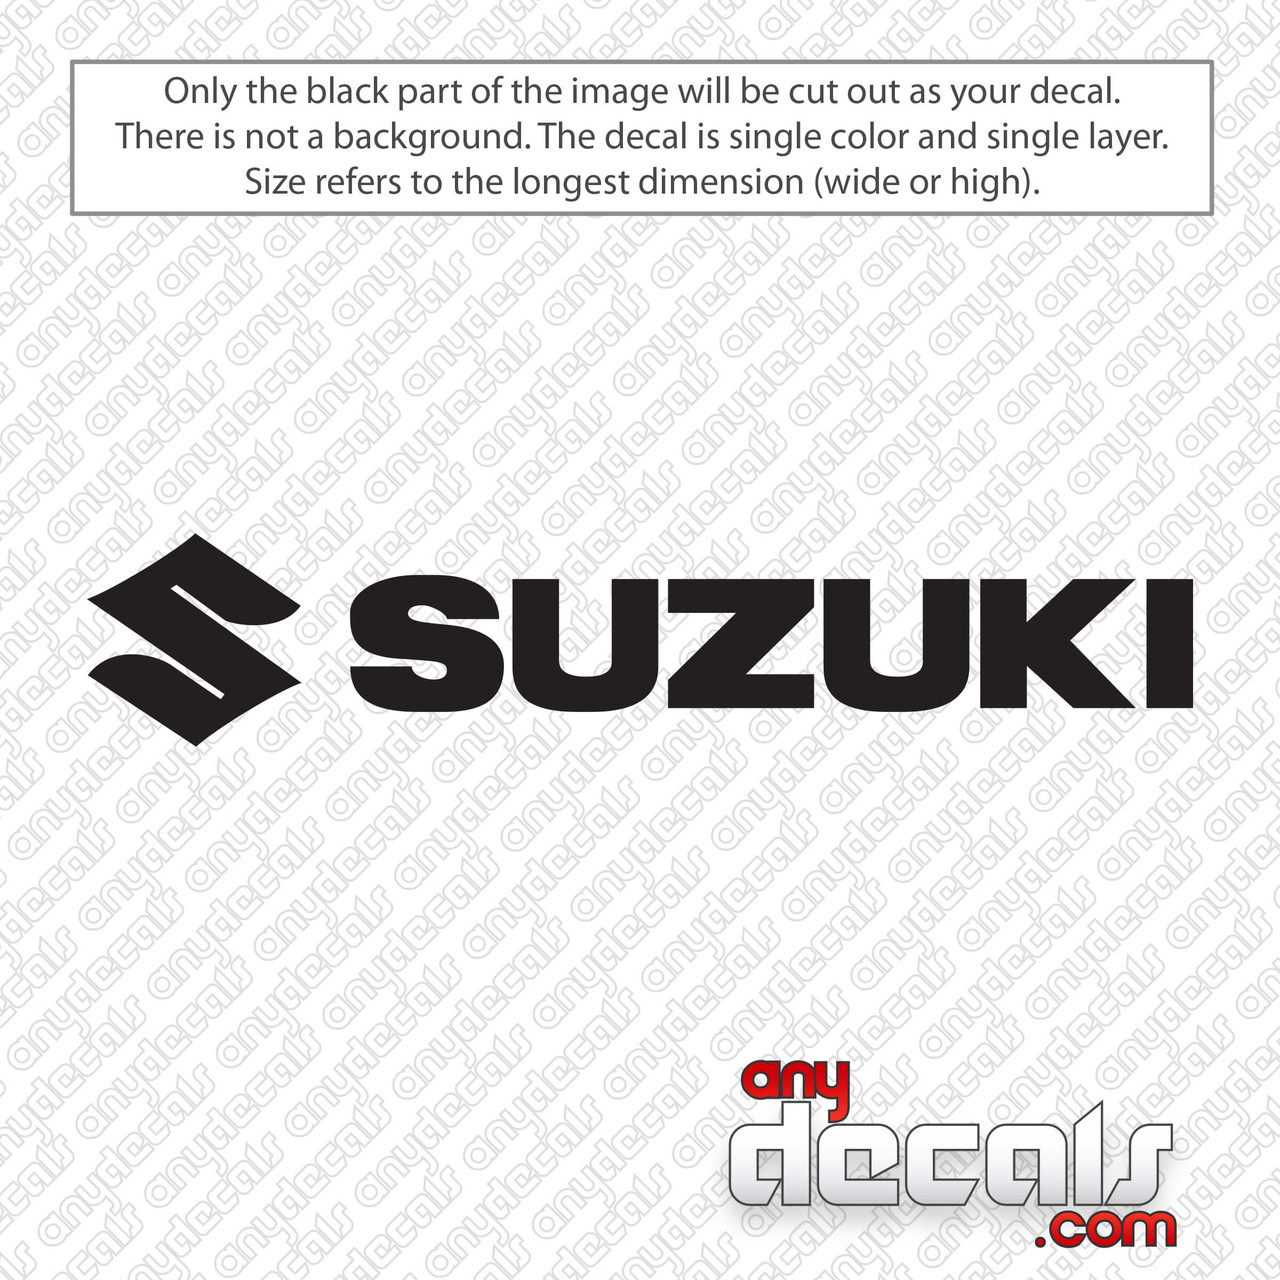 https://cdn11.bigcommerce.com/s-df97c/images/stencil/1280x1280/products/968/1970/suzuki-logo-car-decal-sticker__06317.1593928142.jpg?c=2?imbypass=on